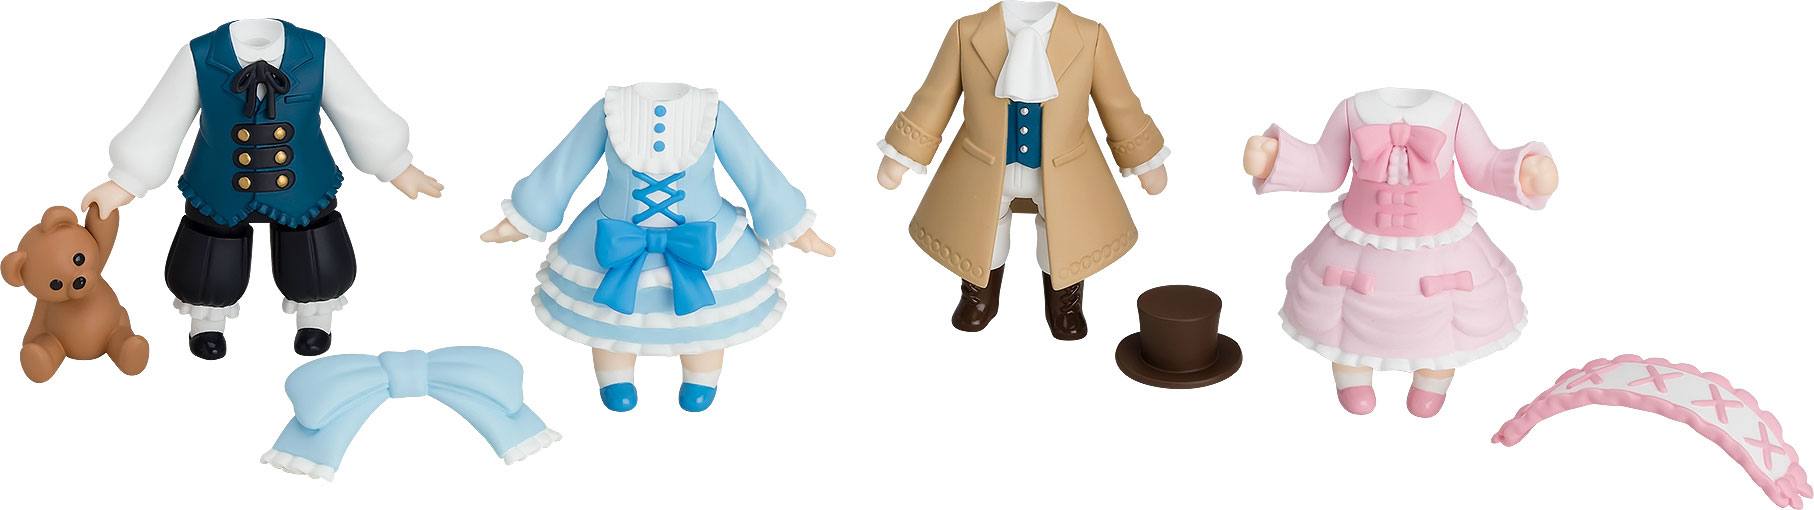 Accesorios para las Figuras Nendoroid Dress-Up Lolita Nendoroid More 4